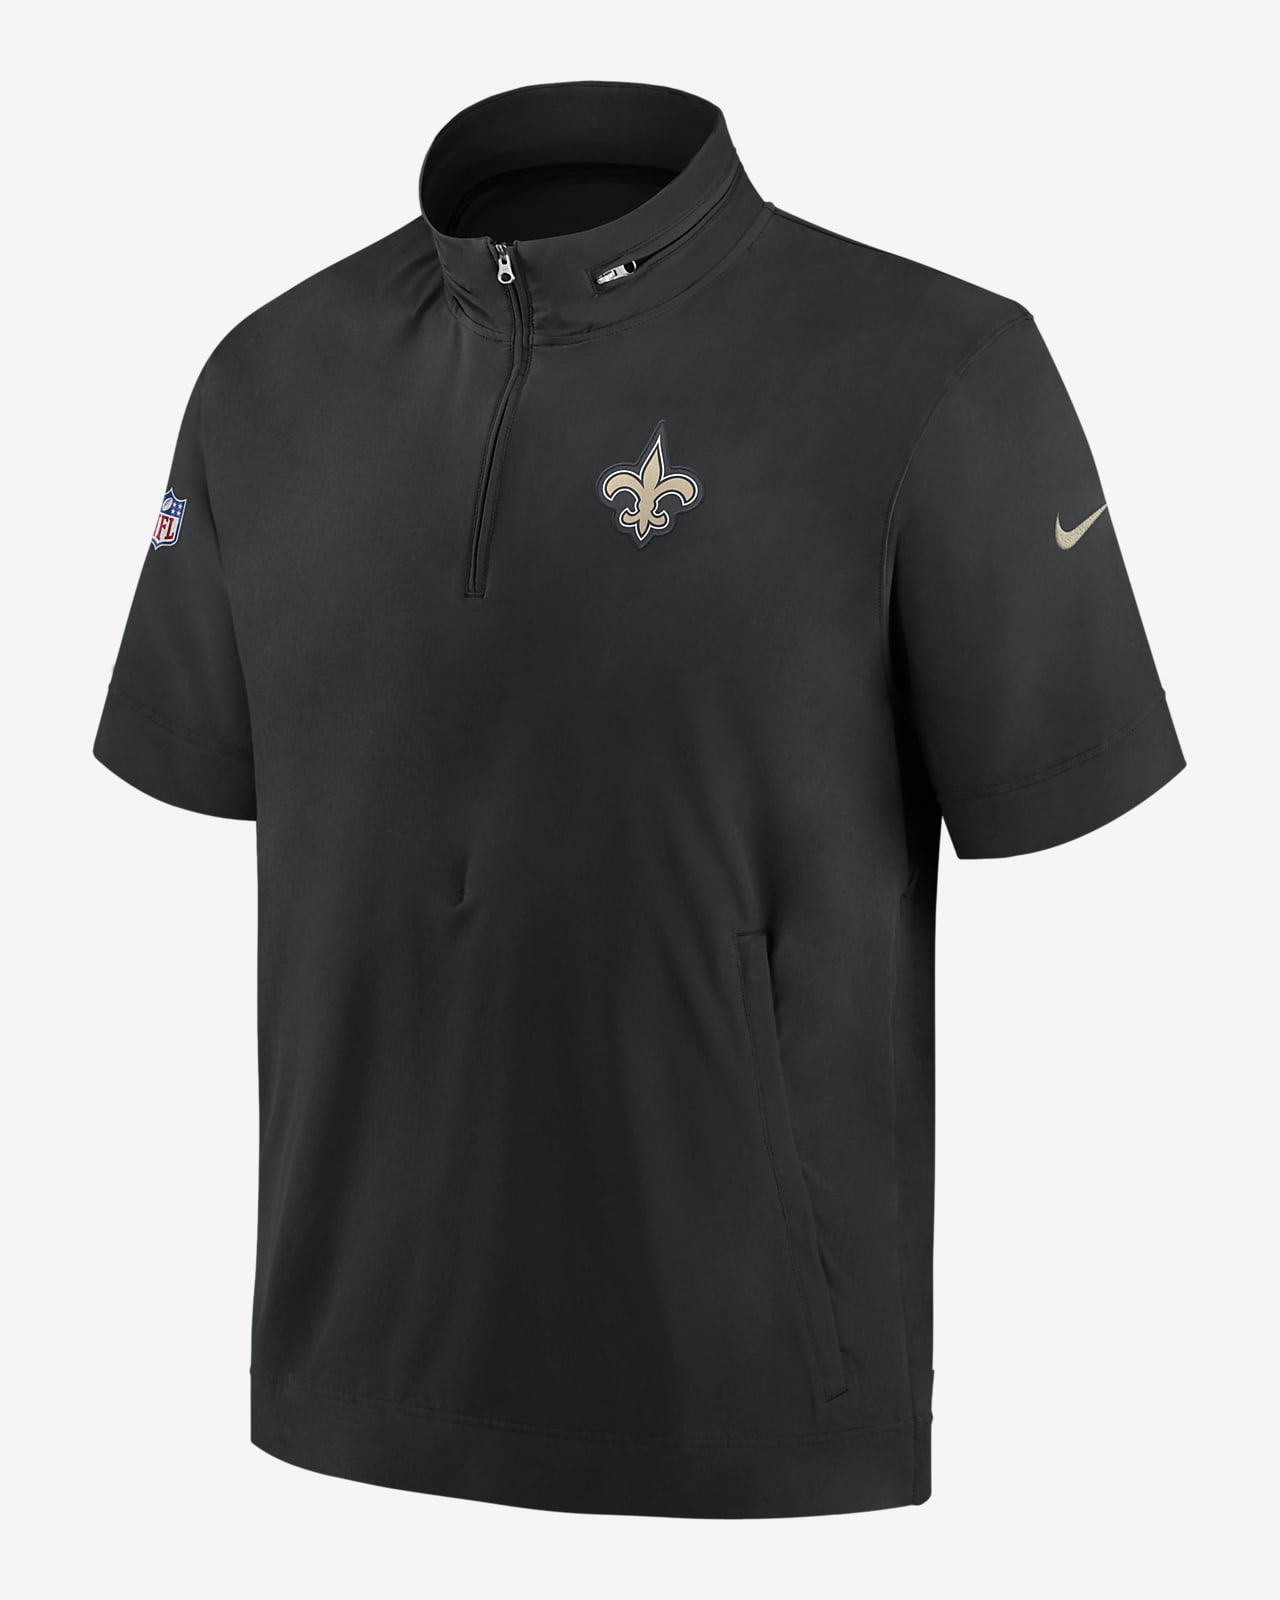 Nike Sideline Coach (NFL New Orleans Saints) Men's Short-Sleeve Jacket